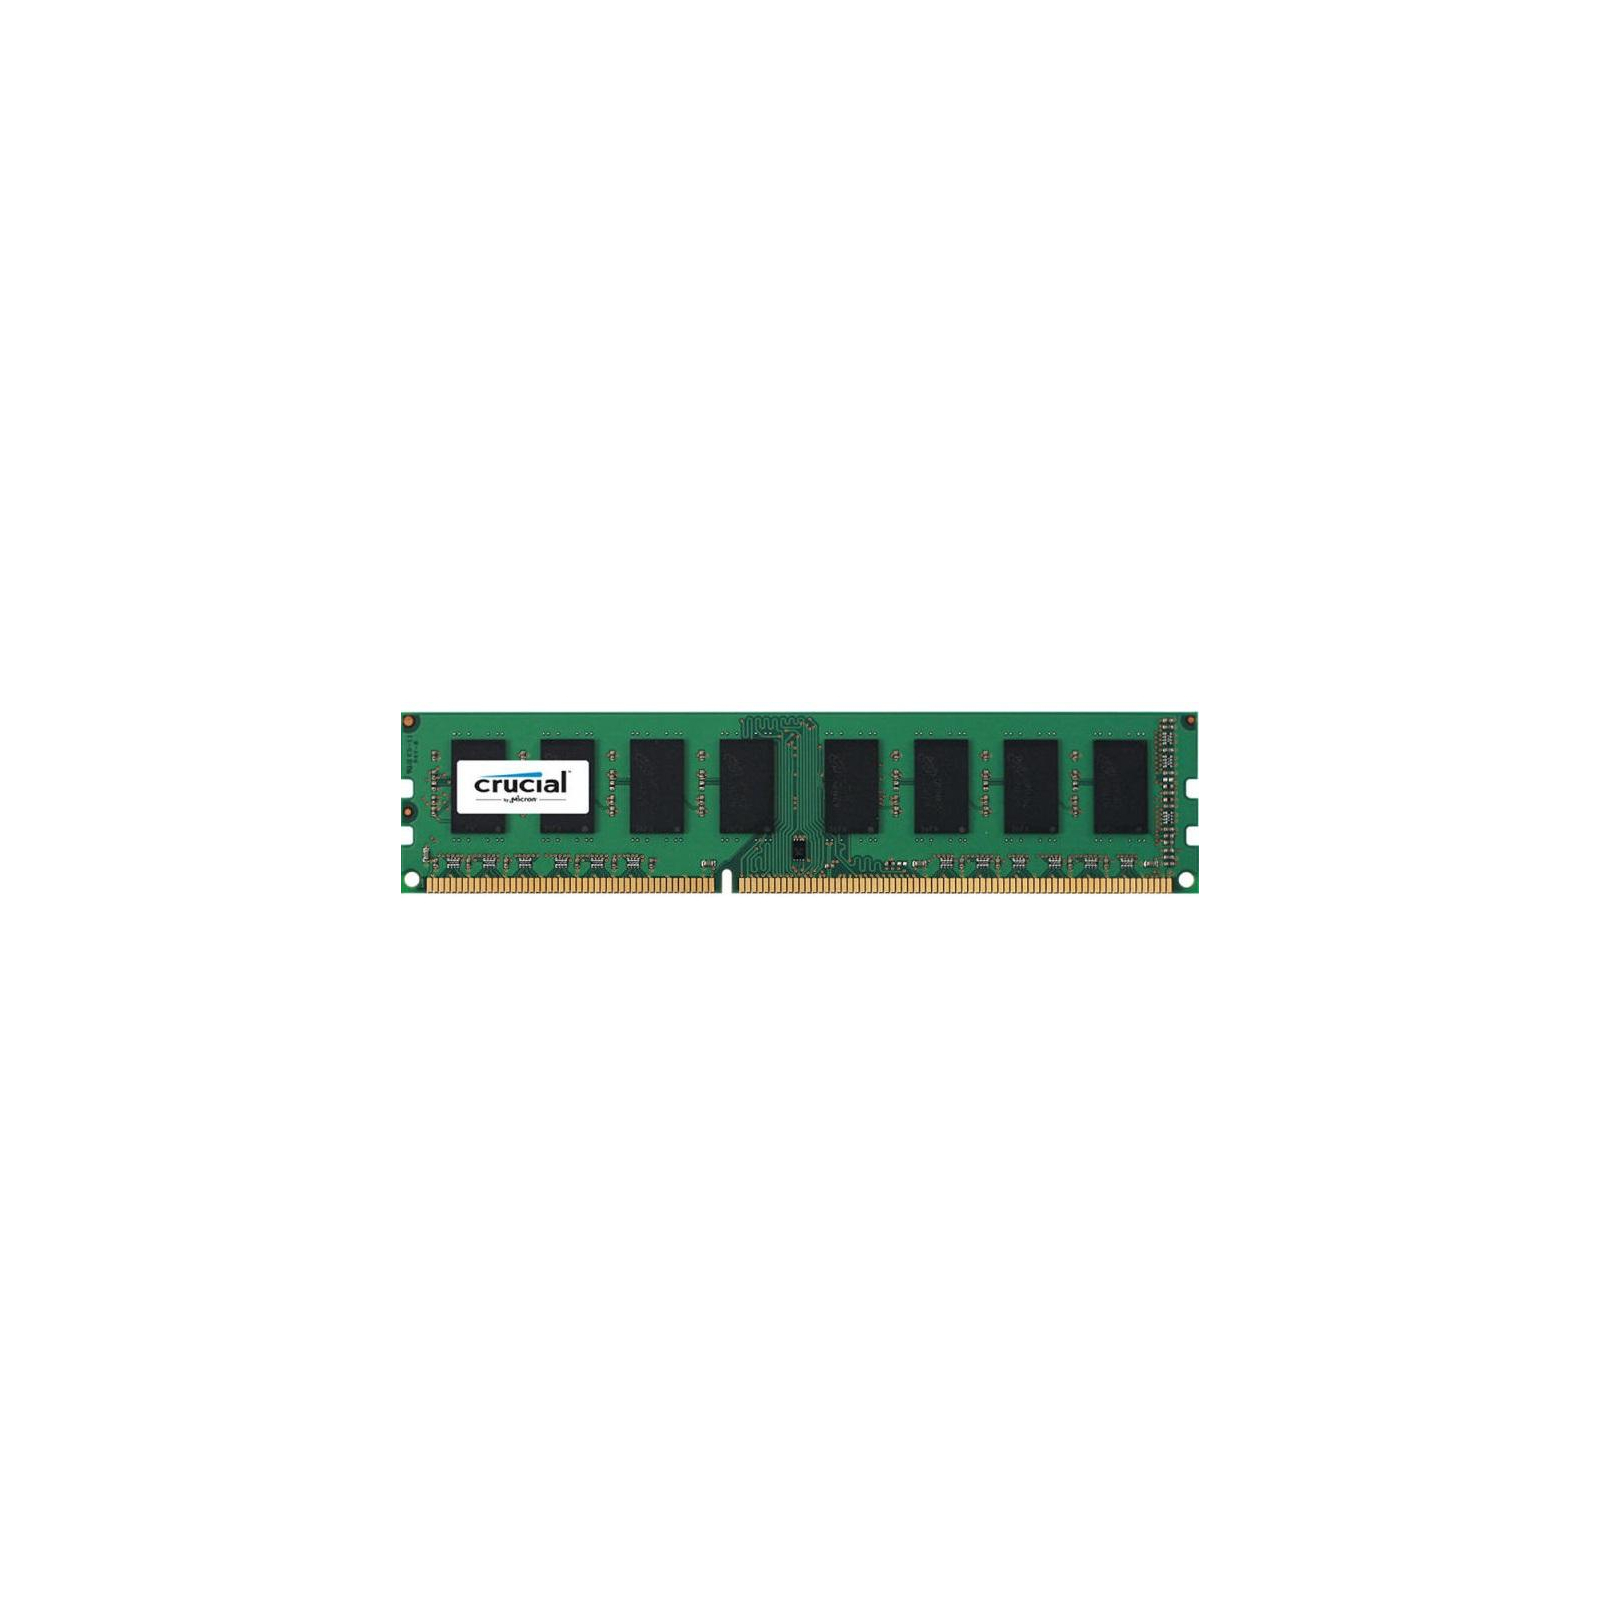 Модуль памяти для компьютера DDR3 16GB 1600 MHz Micron (CT204864BD160B)